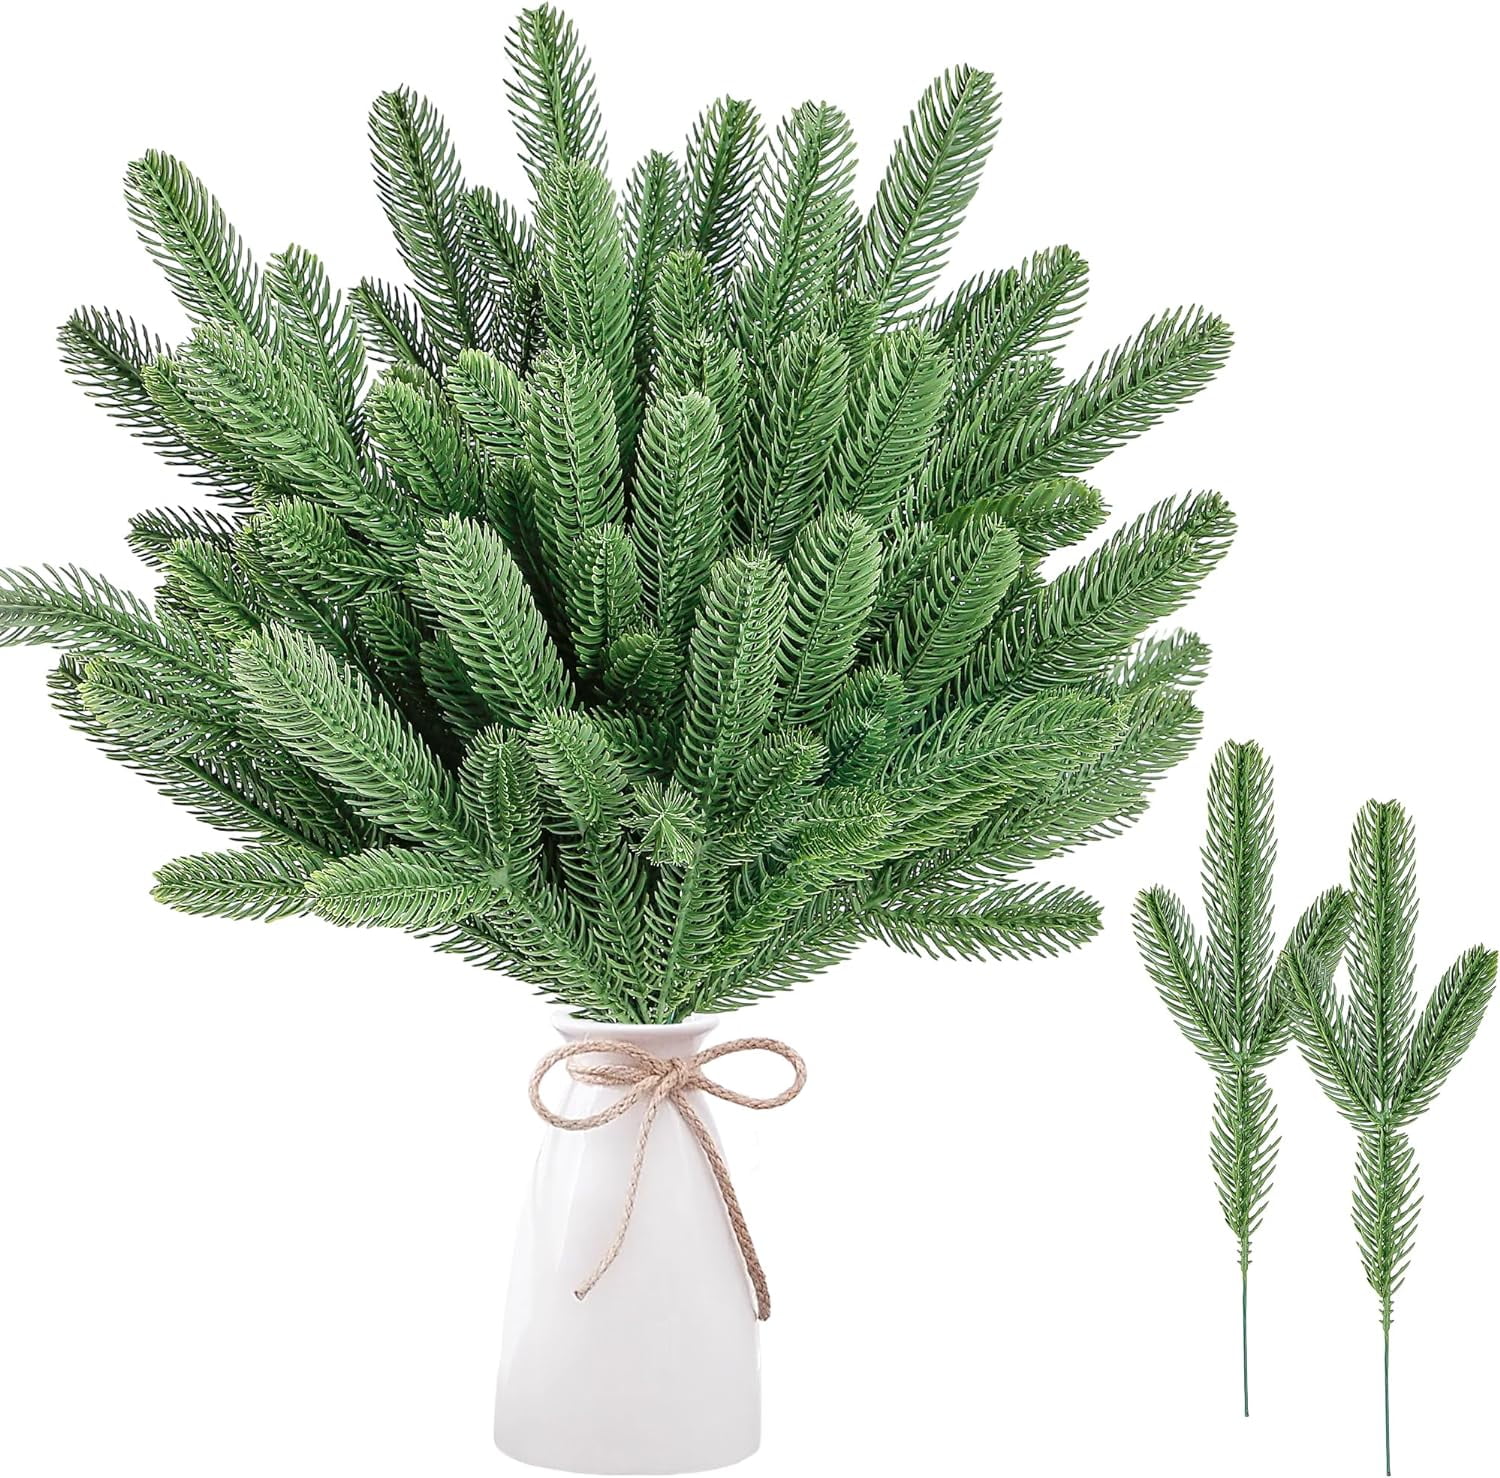 Cheap 30Pcs Artificial Pine Branch Realistic Reusable Plastic Faux Green  Plants Christmas Wreath DIY Crafts Home Decoration Supplies